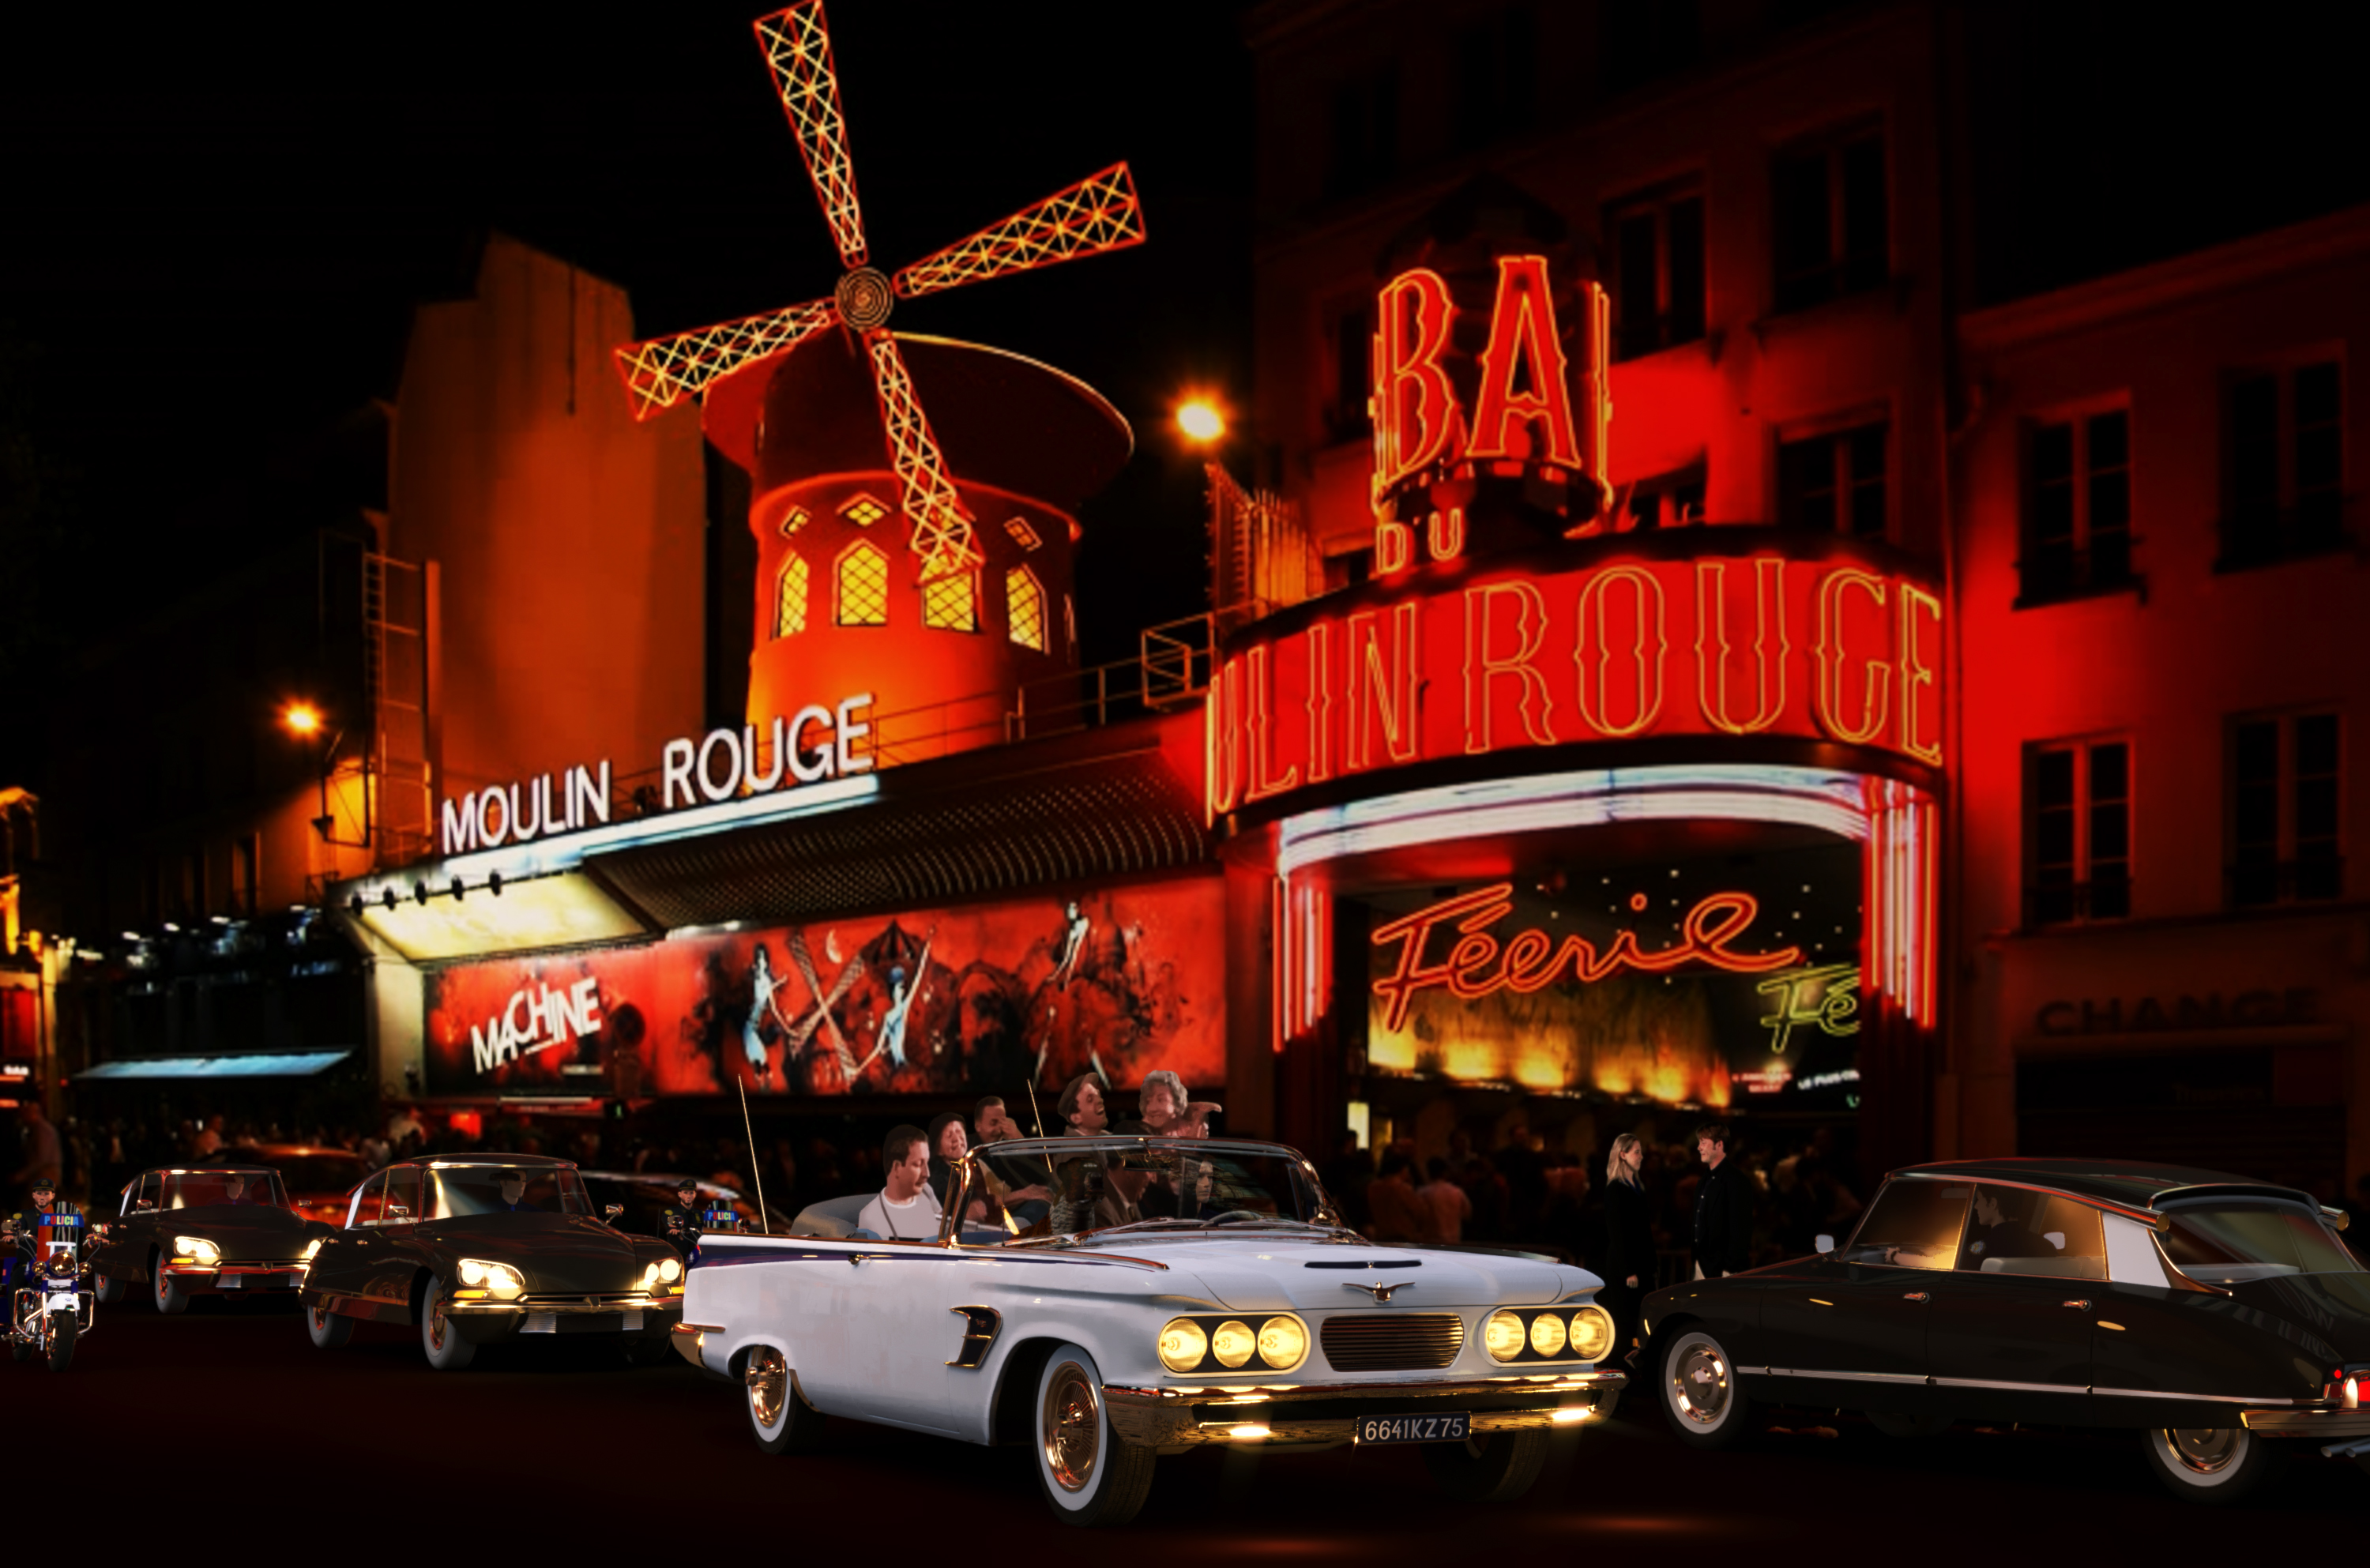 Pr amer u Moulin rouge3 3000.jpg